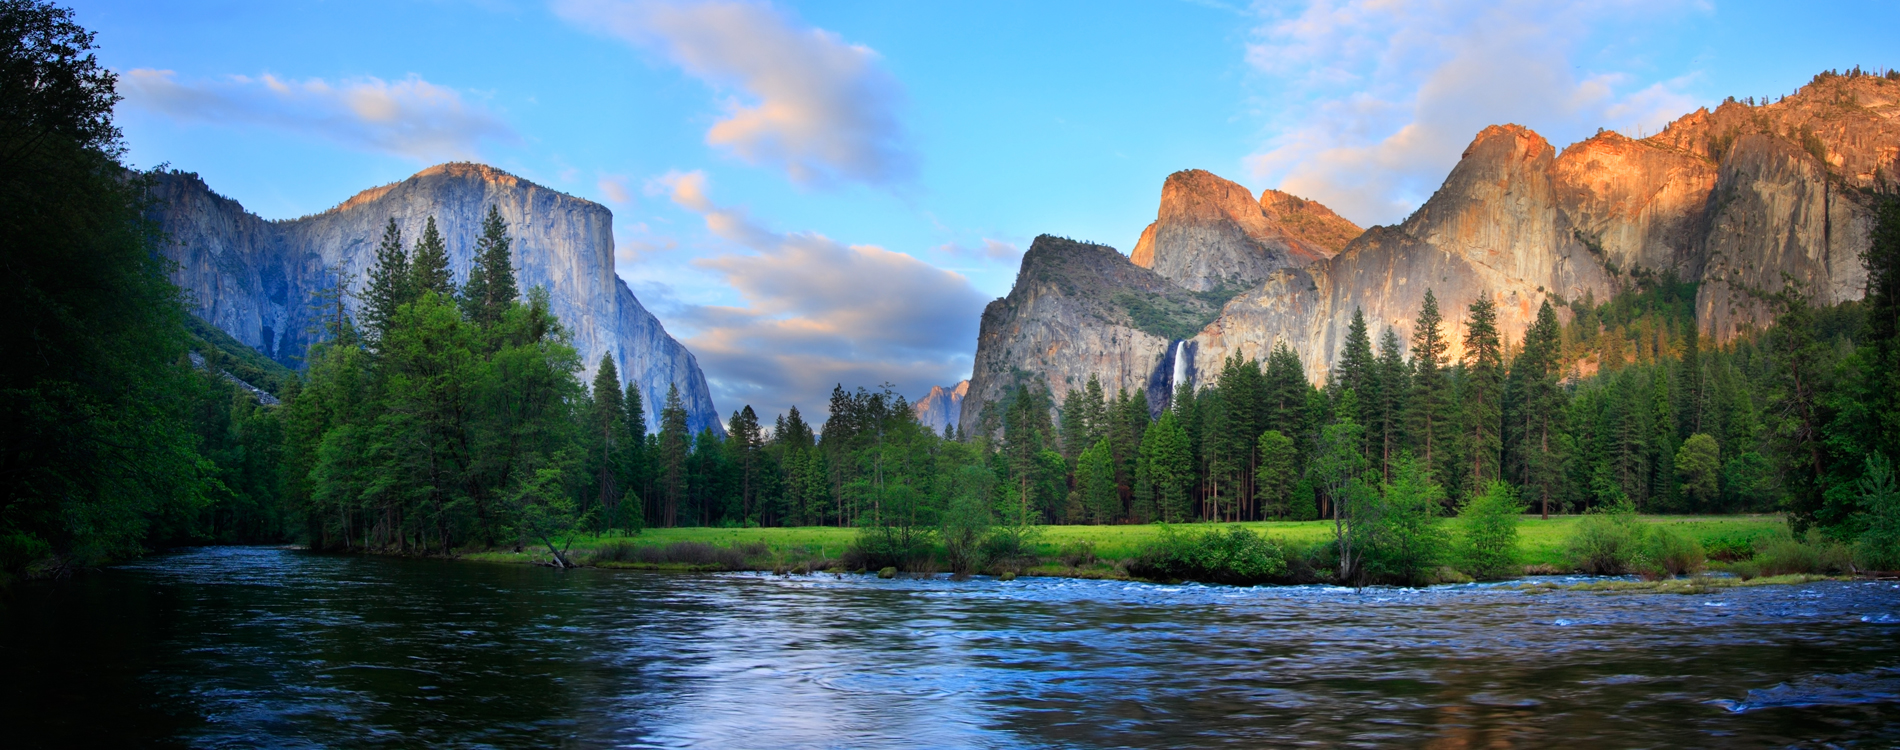 Yosemite National Park - Yosemite Valley